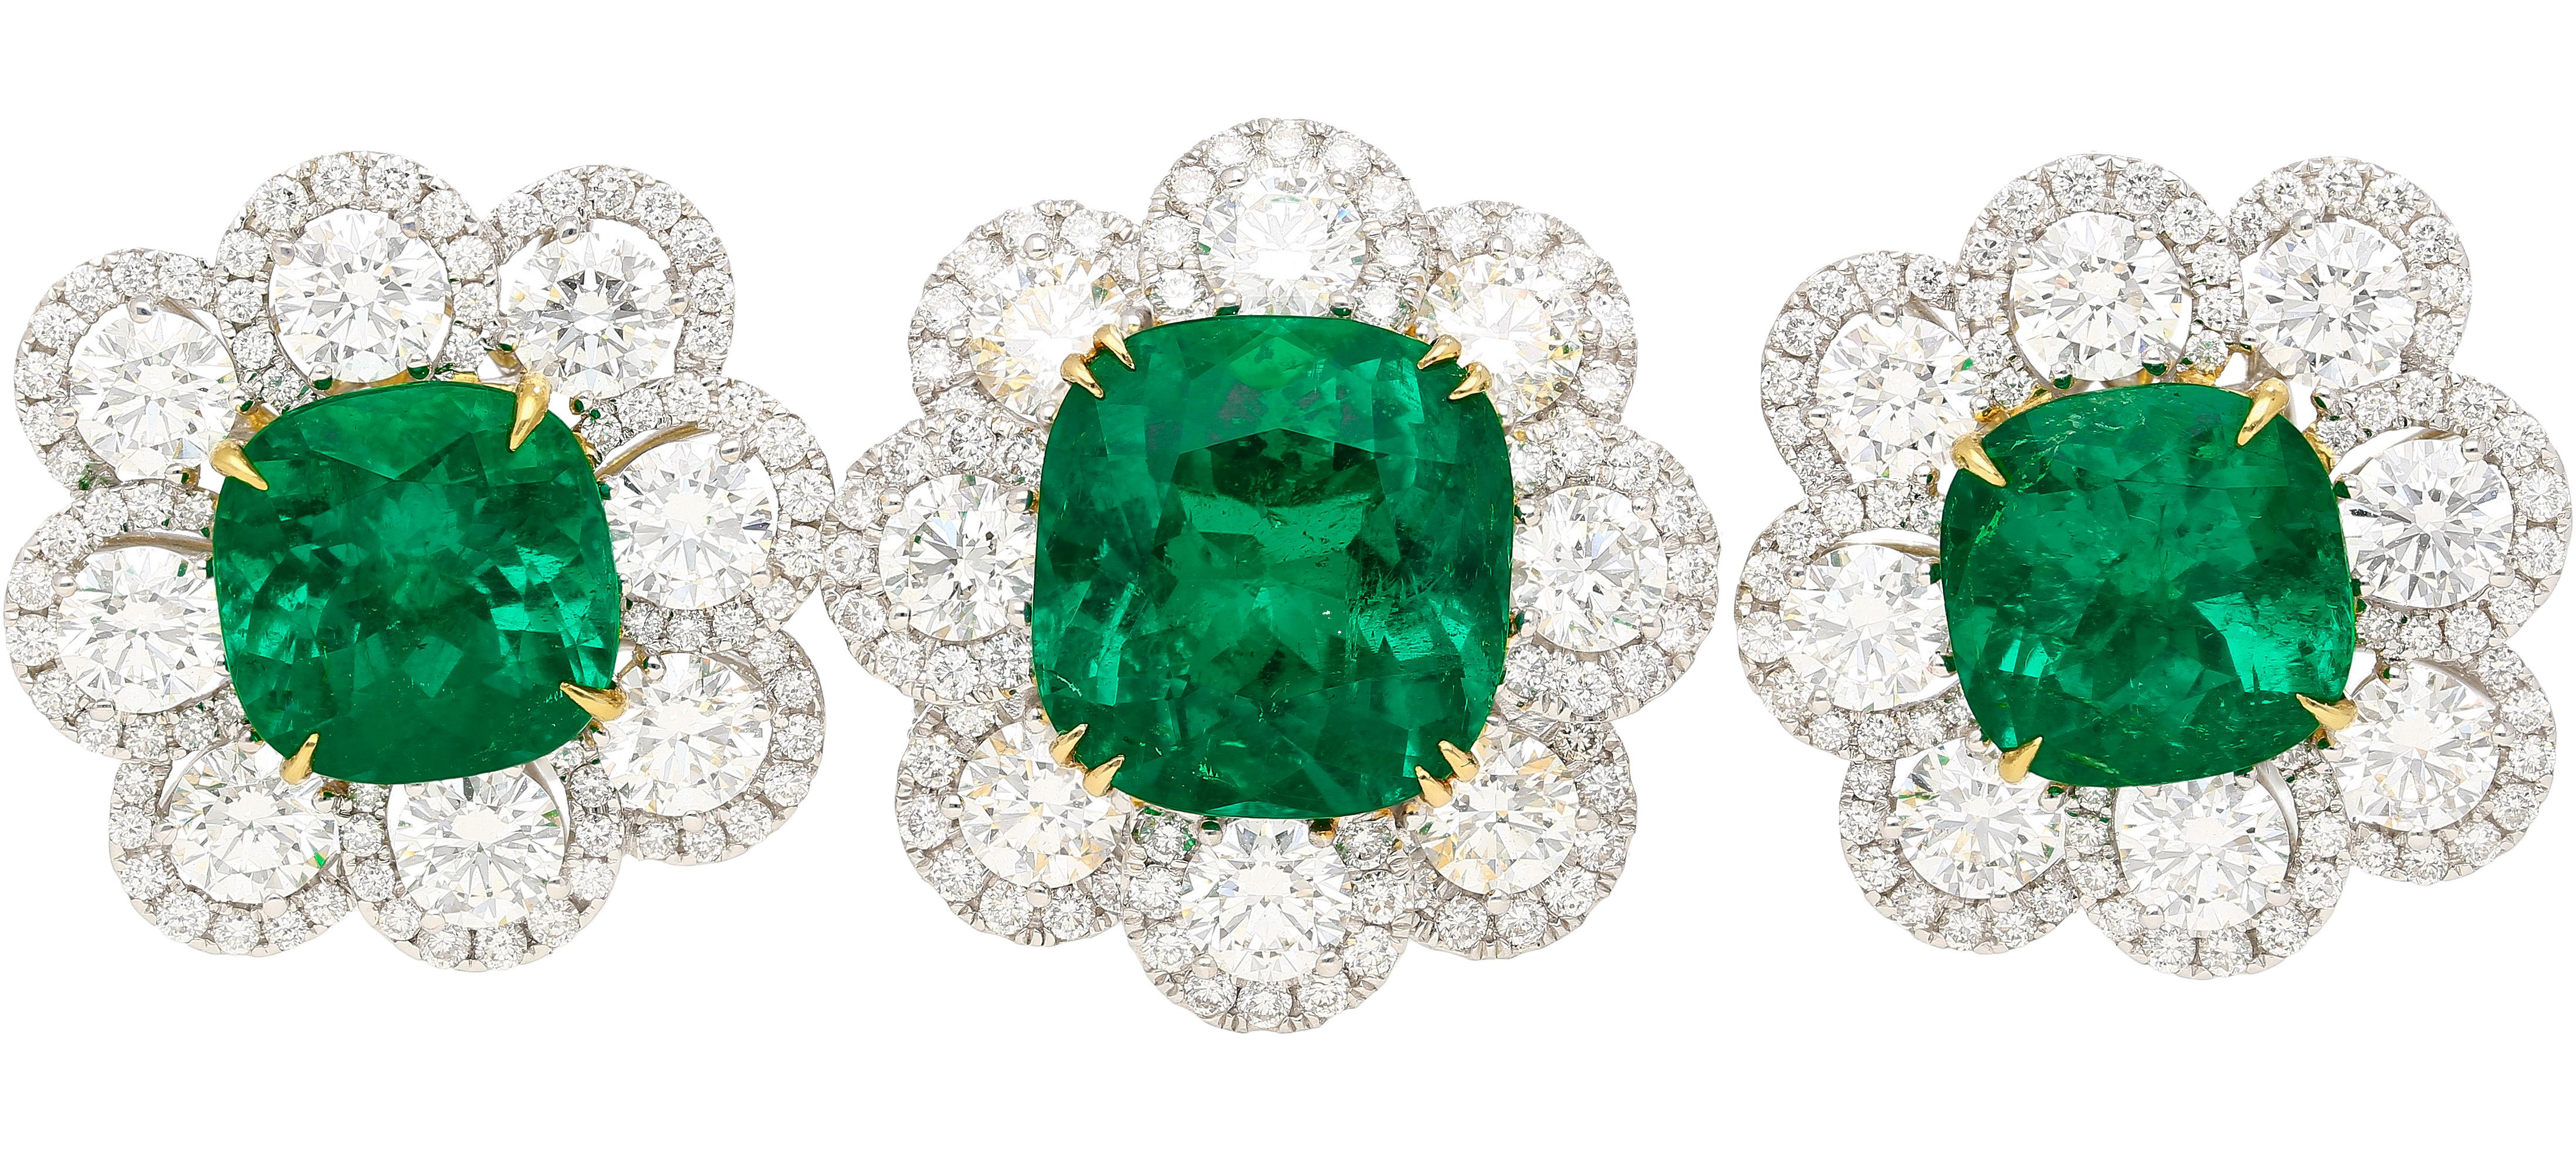 ~20 Carat Colombian Emerald Cushion Cut GRS Certified and Diamond 18K Set